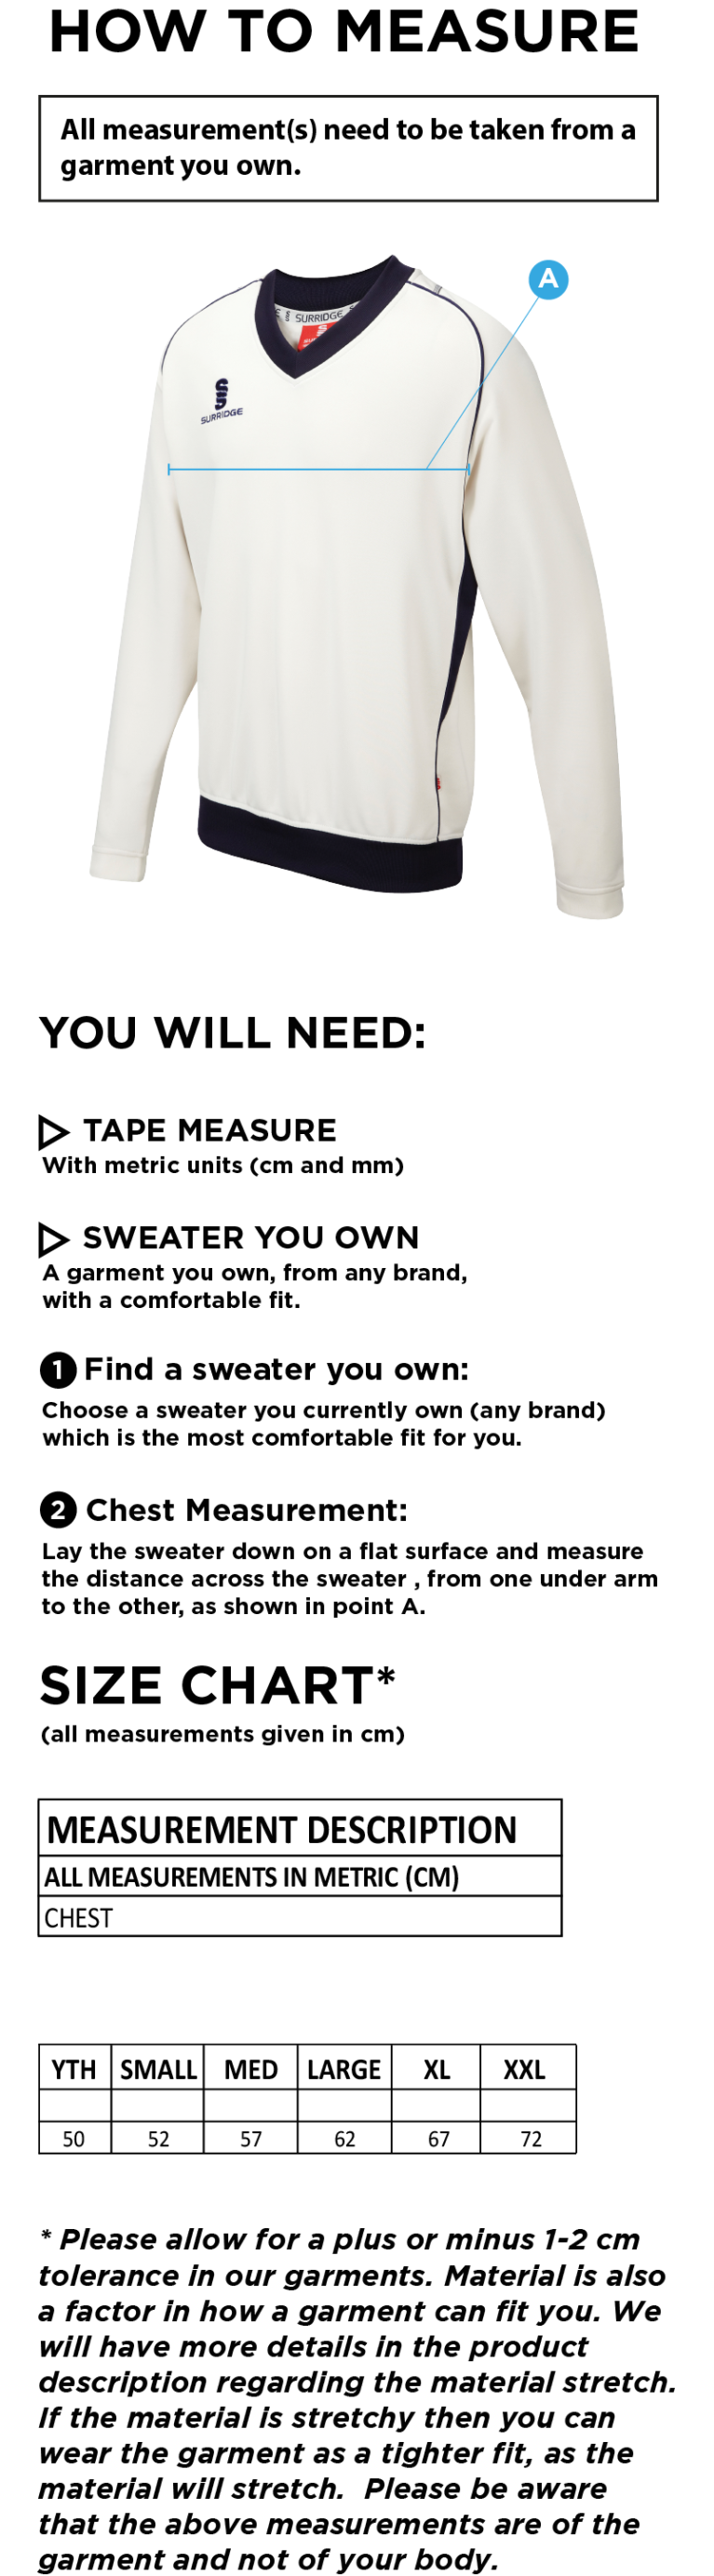 Byfleet CC Senior Long Sleeve Sweater - Size Guide